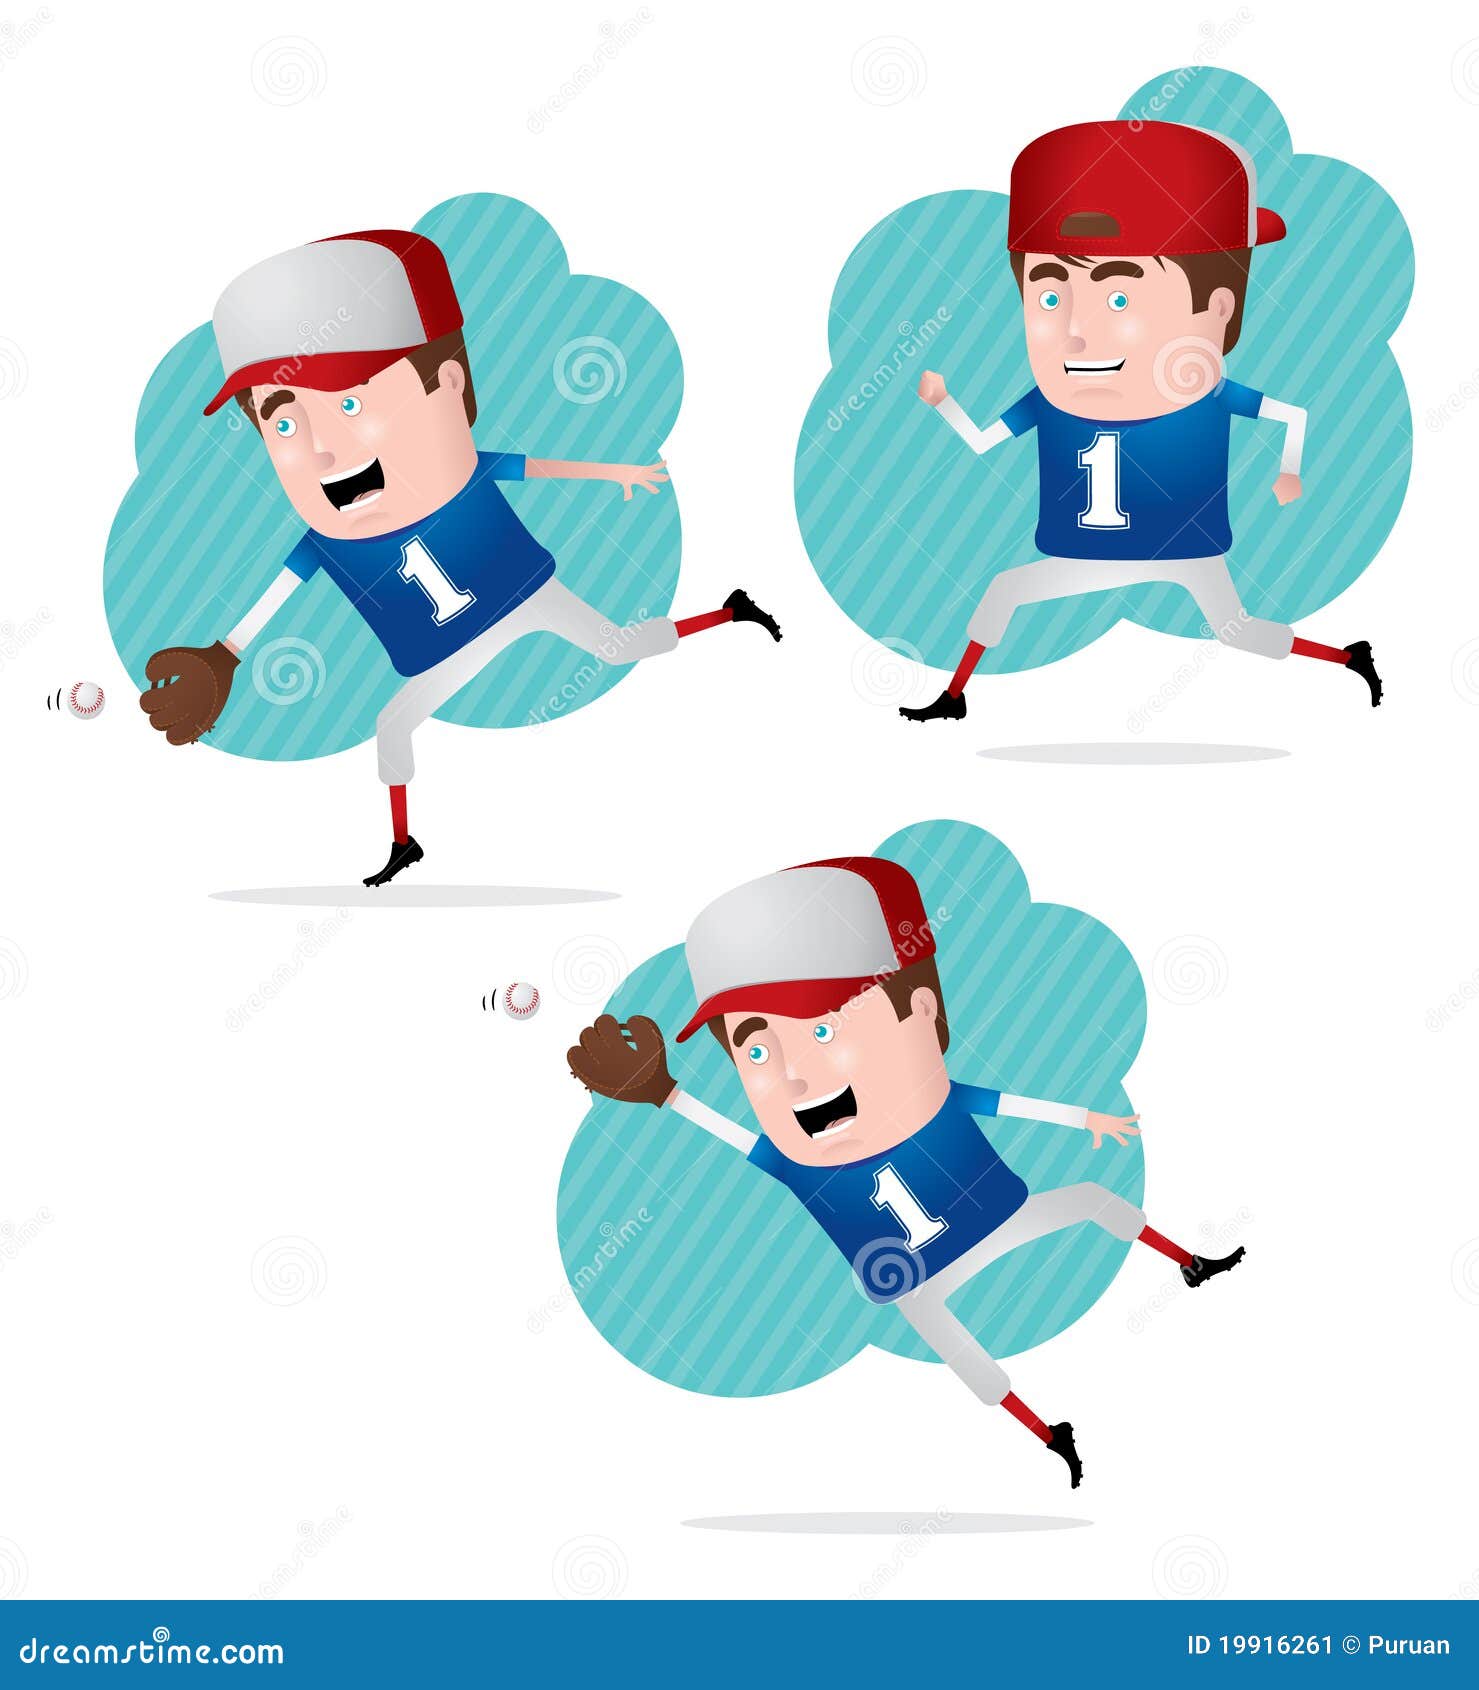 A cartoon illustration of a man baseball player running Stock